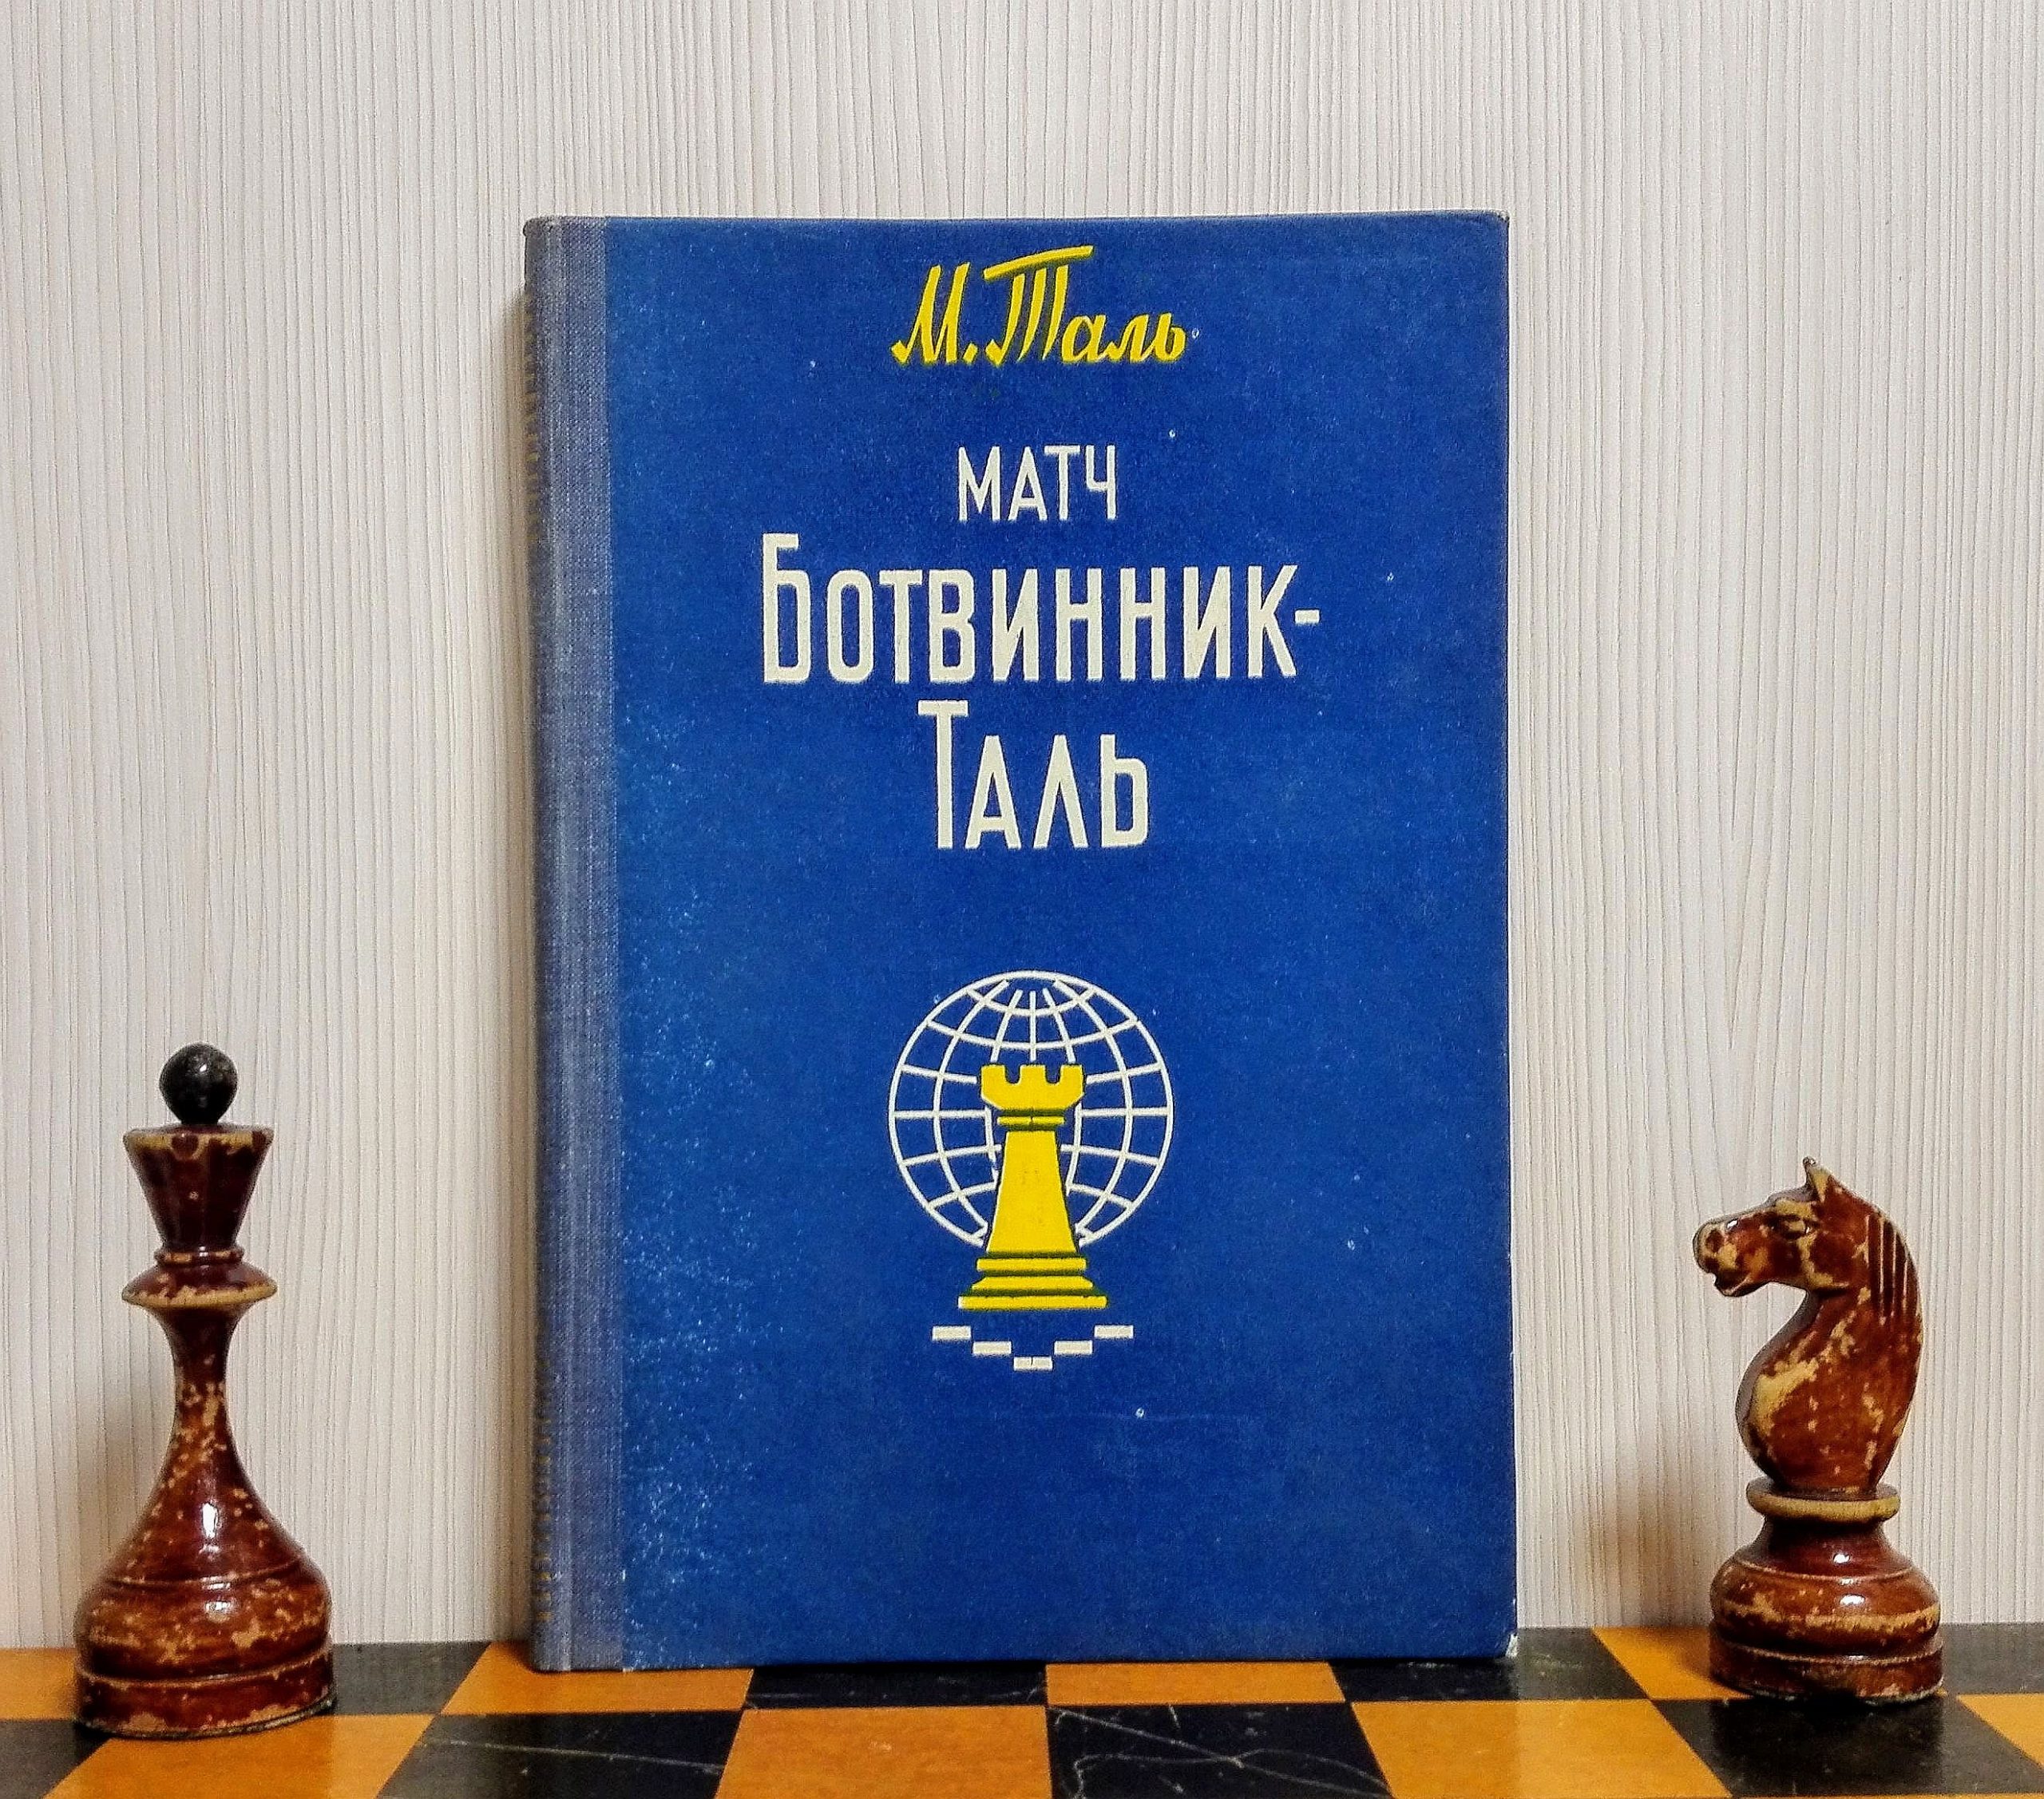 Botvinnik - Tal World Championship Match (1960) chess event